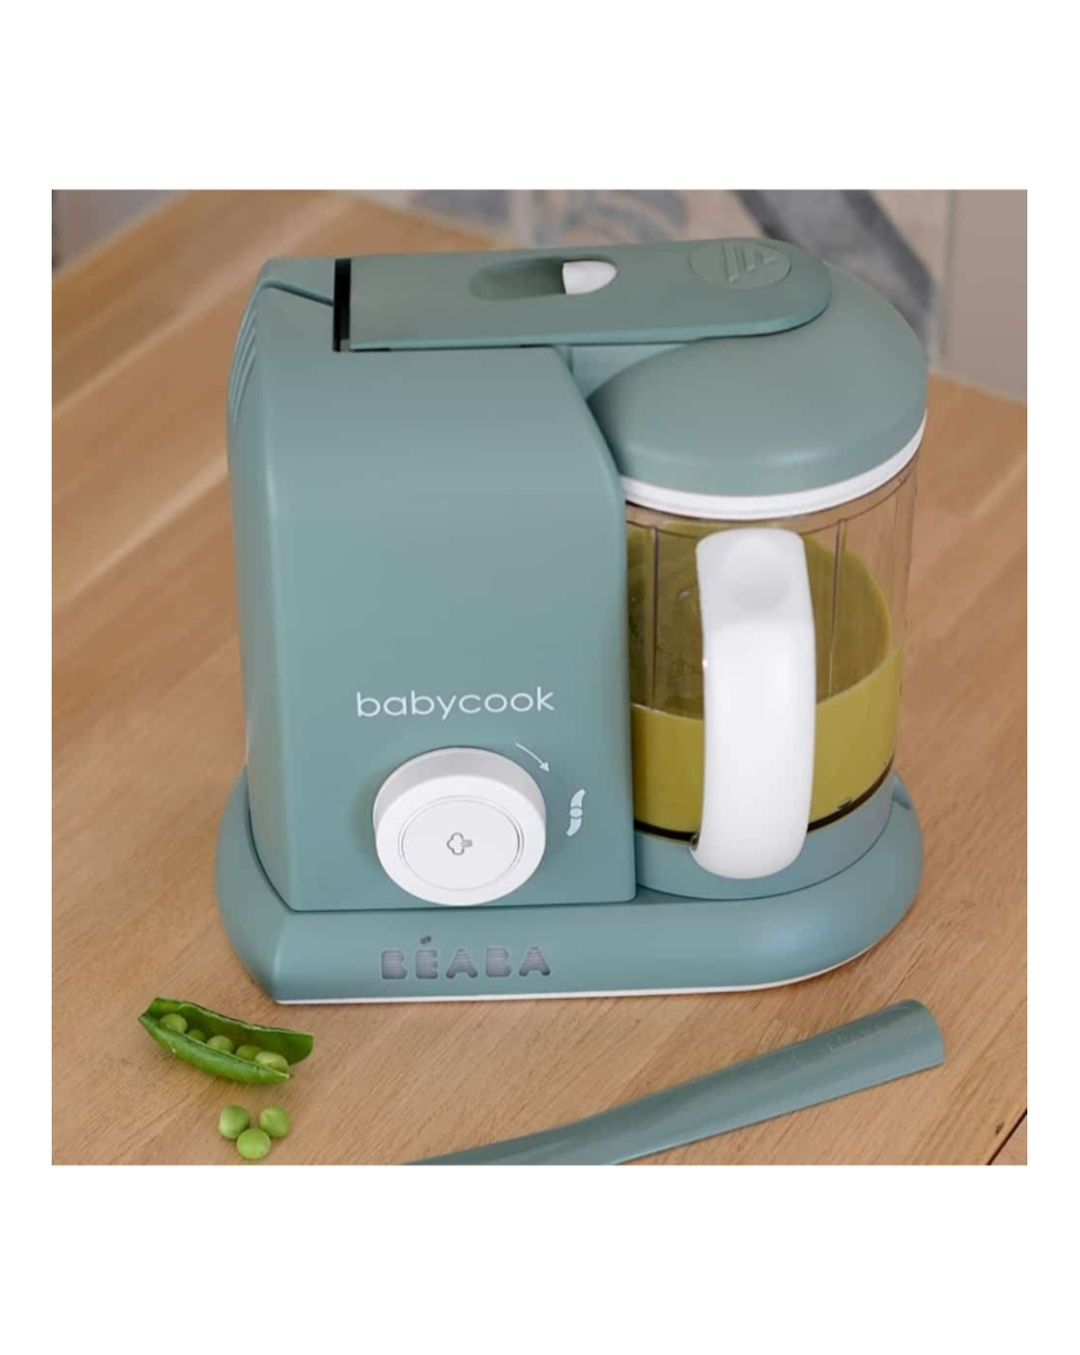 Beaba Babycook Classic Original Baby Food Maker 4 in1 Steam Cooker